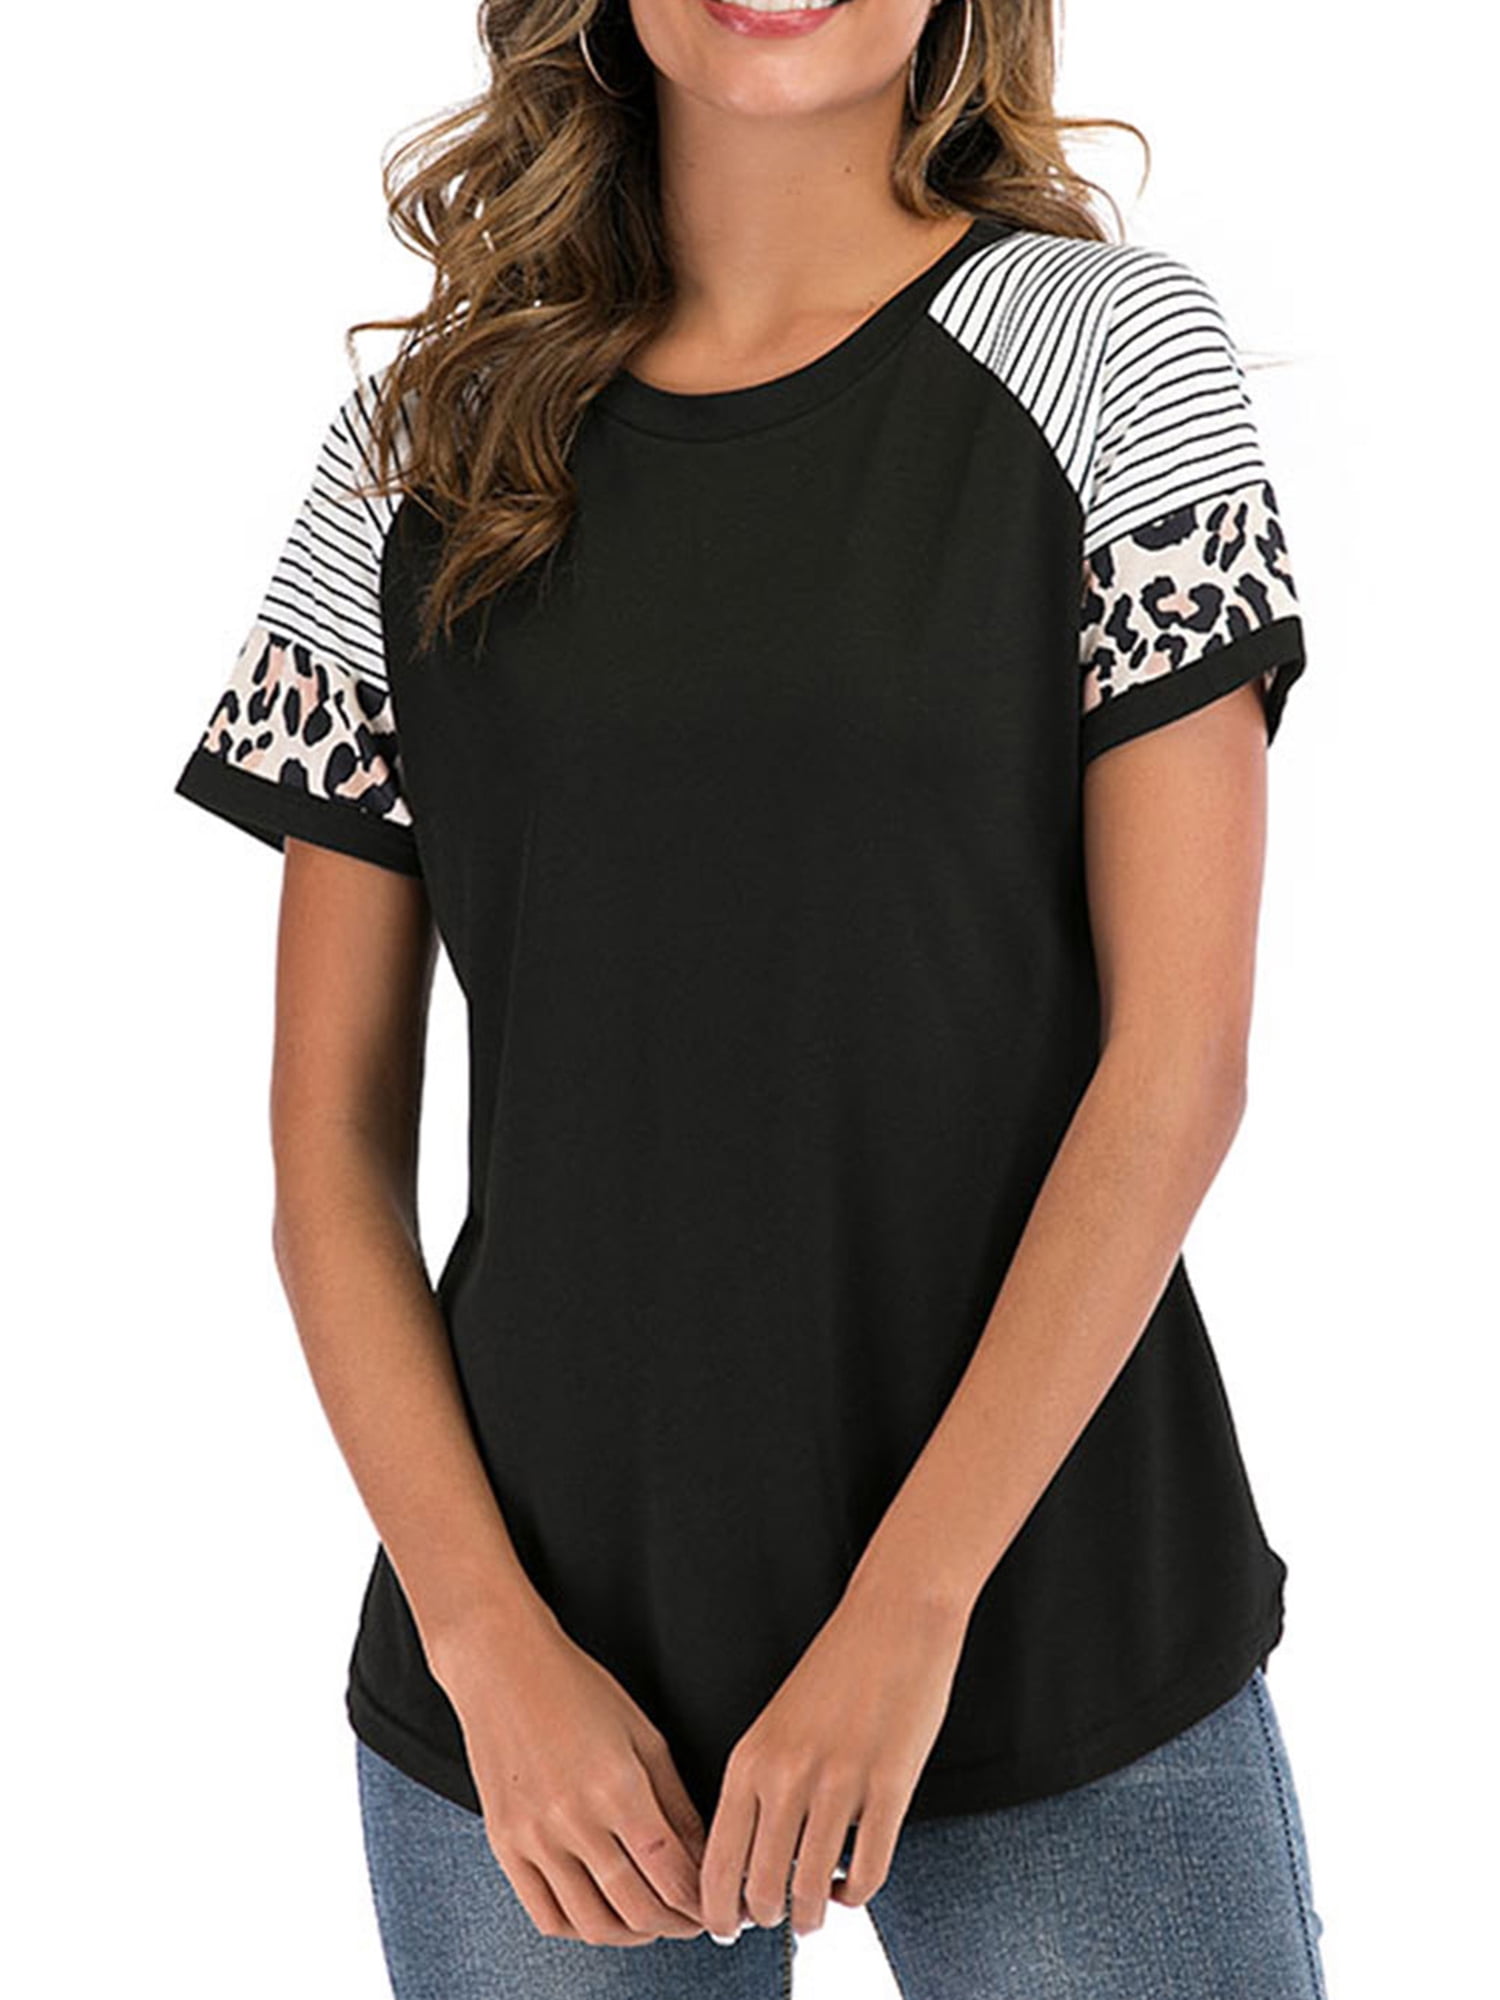 UK Women One Shoulder Top Pullover Ladies Baggy Leopard Blouse T-shirt Size 8-26 